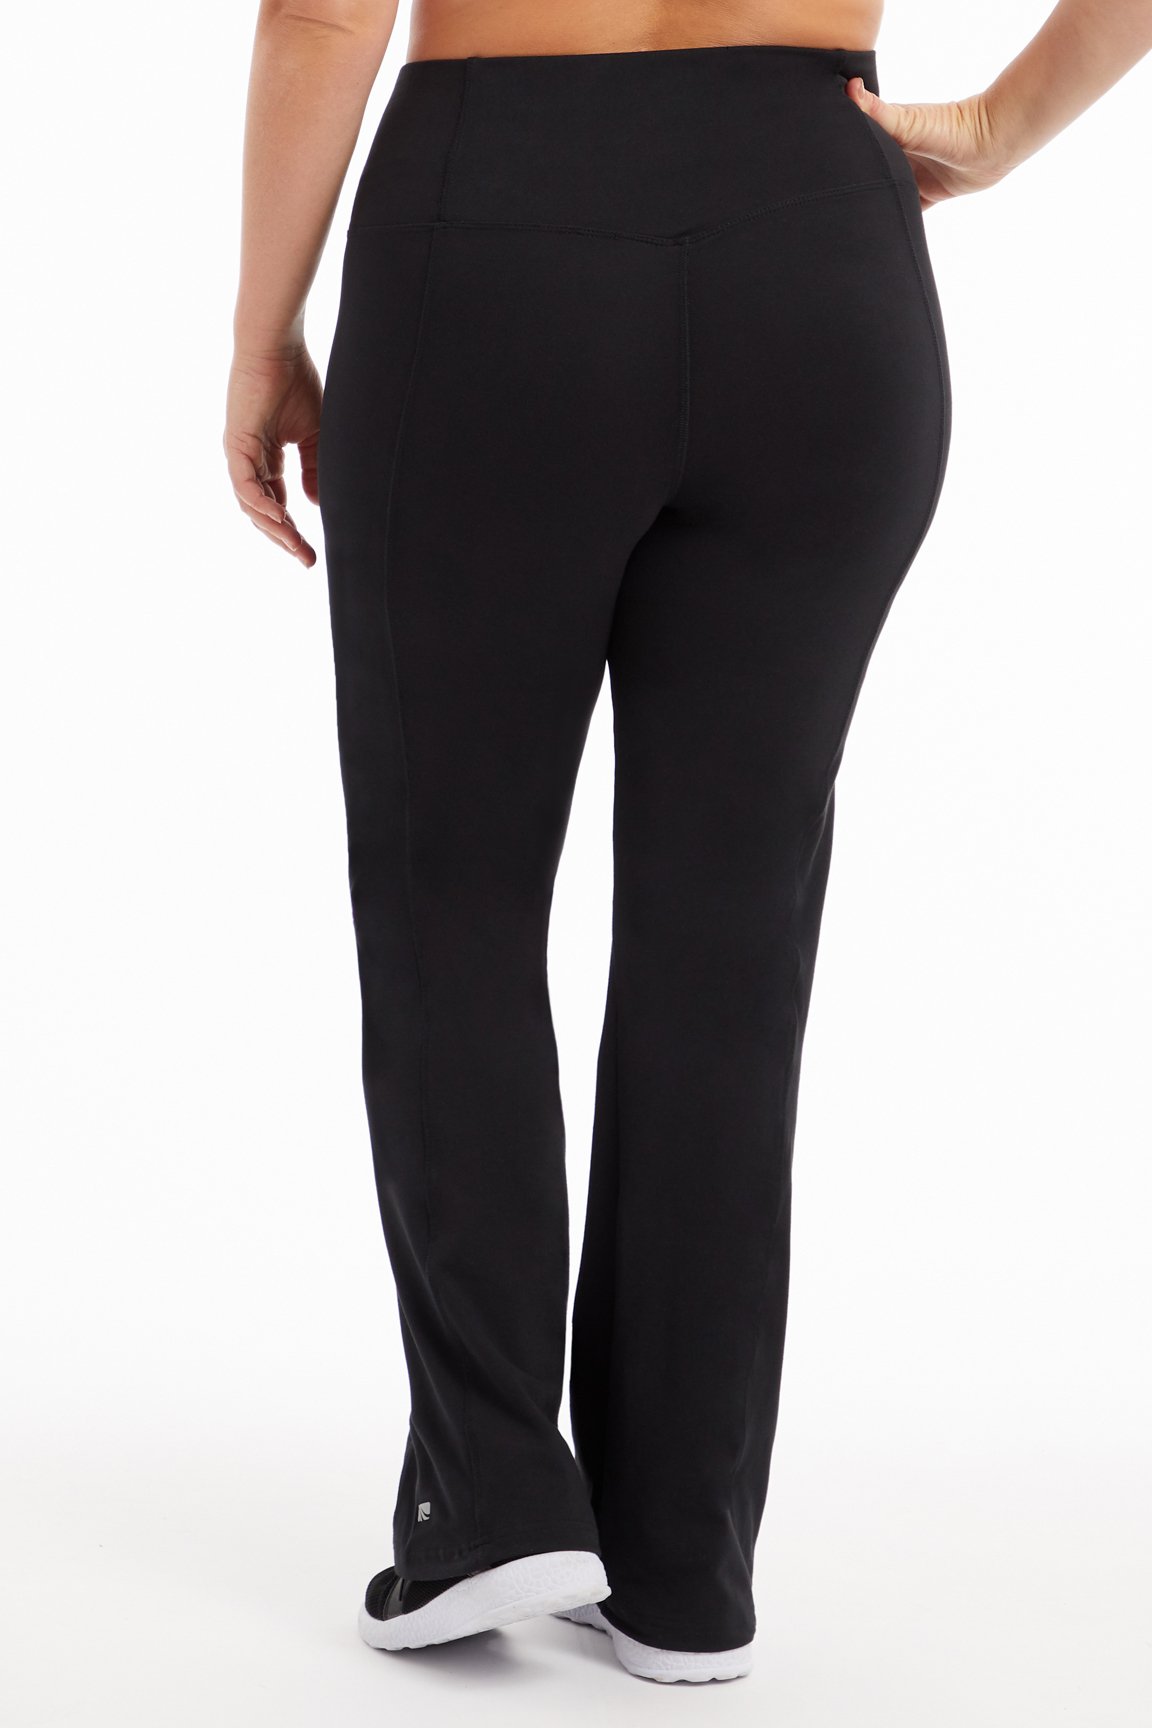 Imcute Women's Yoga Pants Leggings High Waisted Wide Leg Yoga Flare Pants  Tummy Control Workout Running Pants Black XXL 